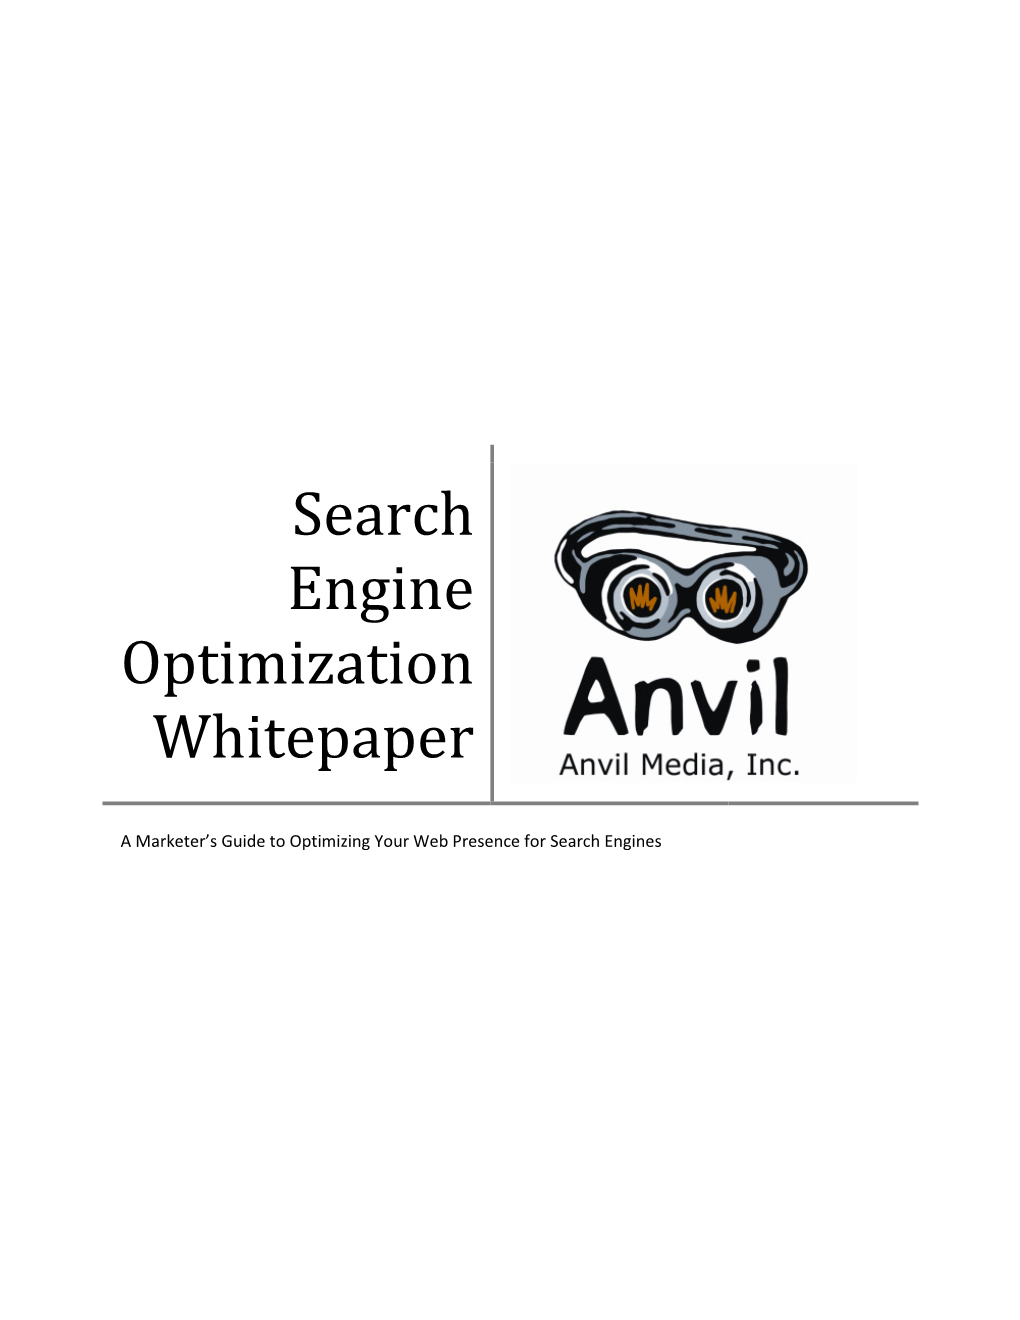 Search Engine Optimization Whitepaper